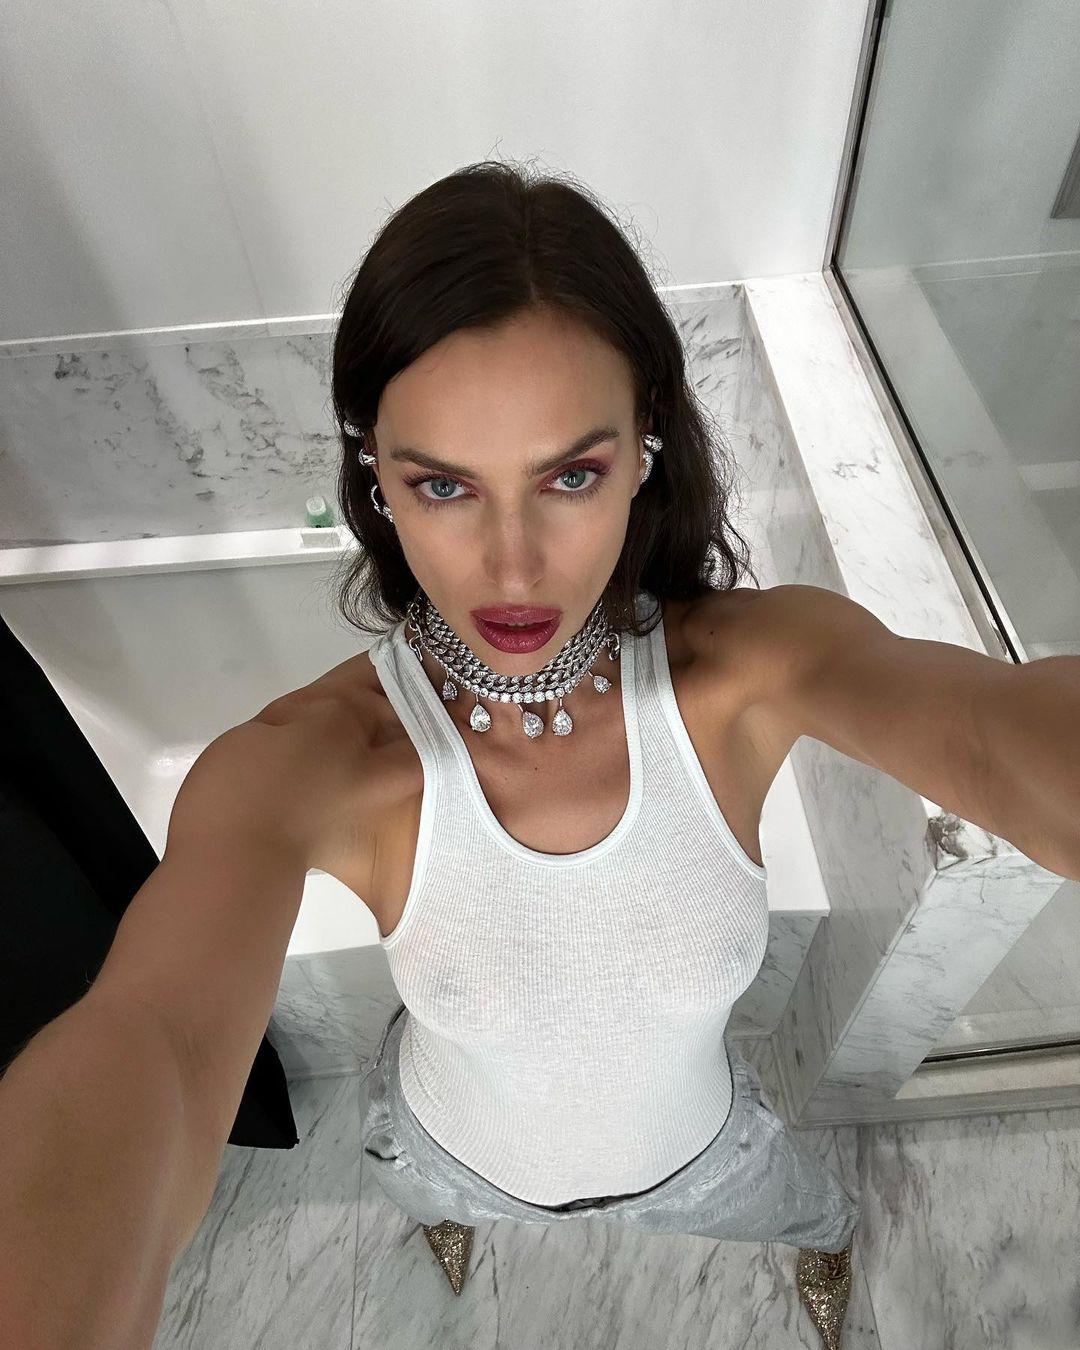 Irina Shayk is more than happy to break fashion rules